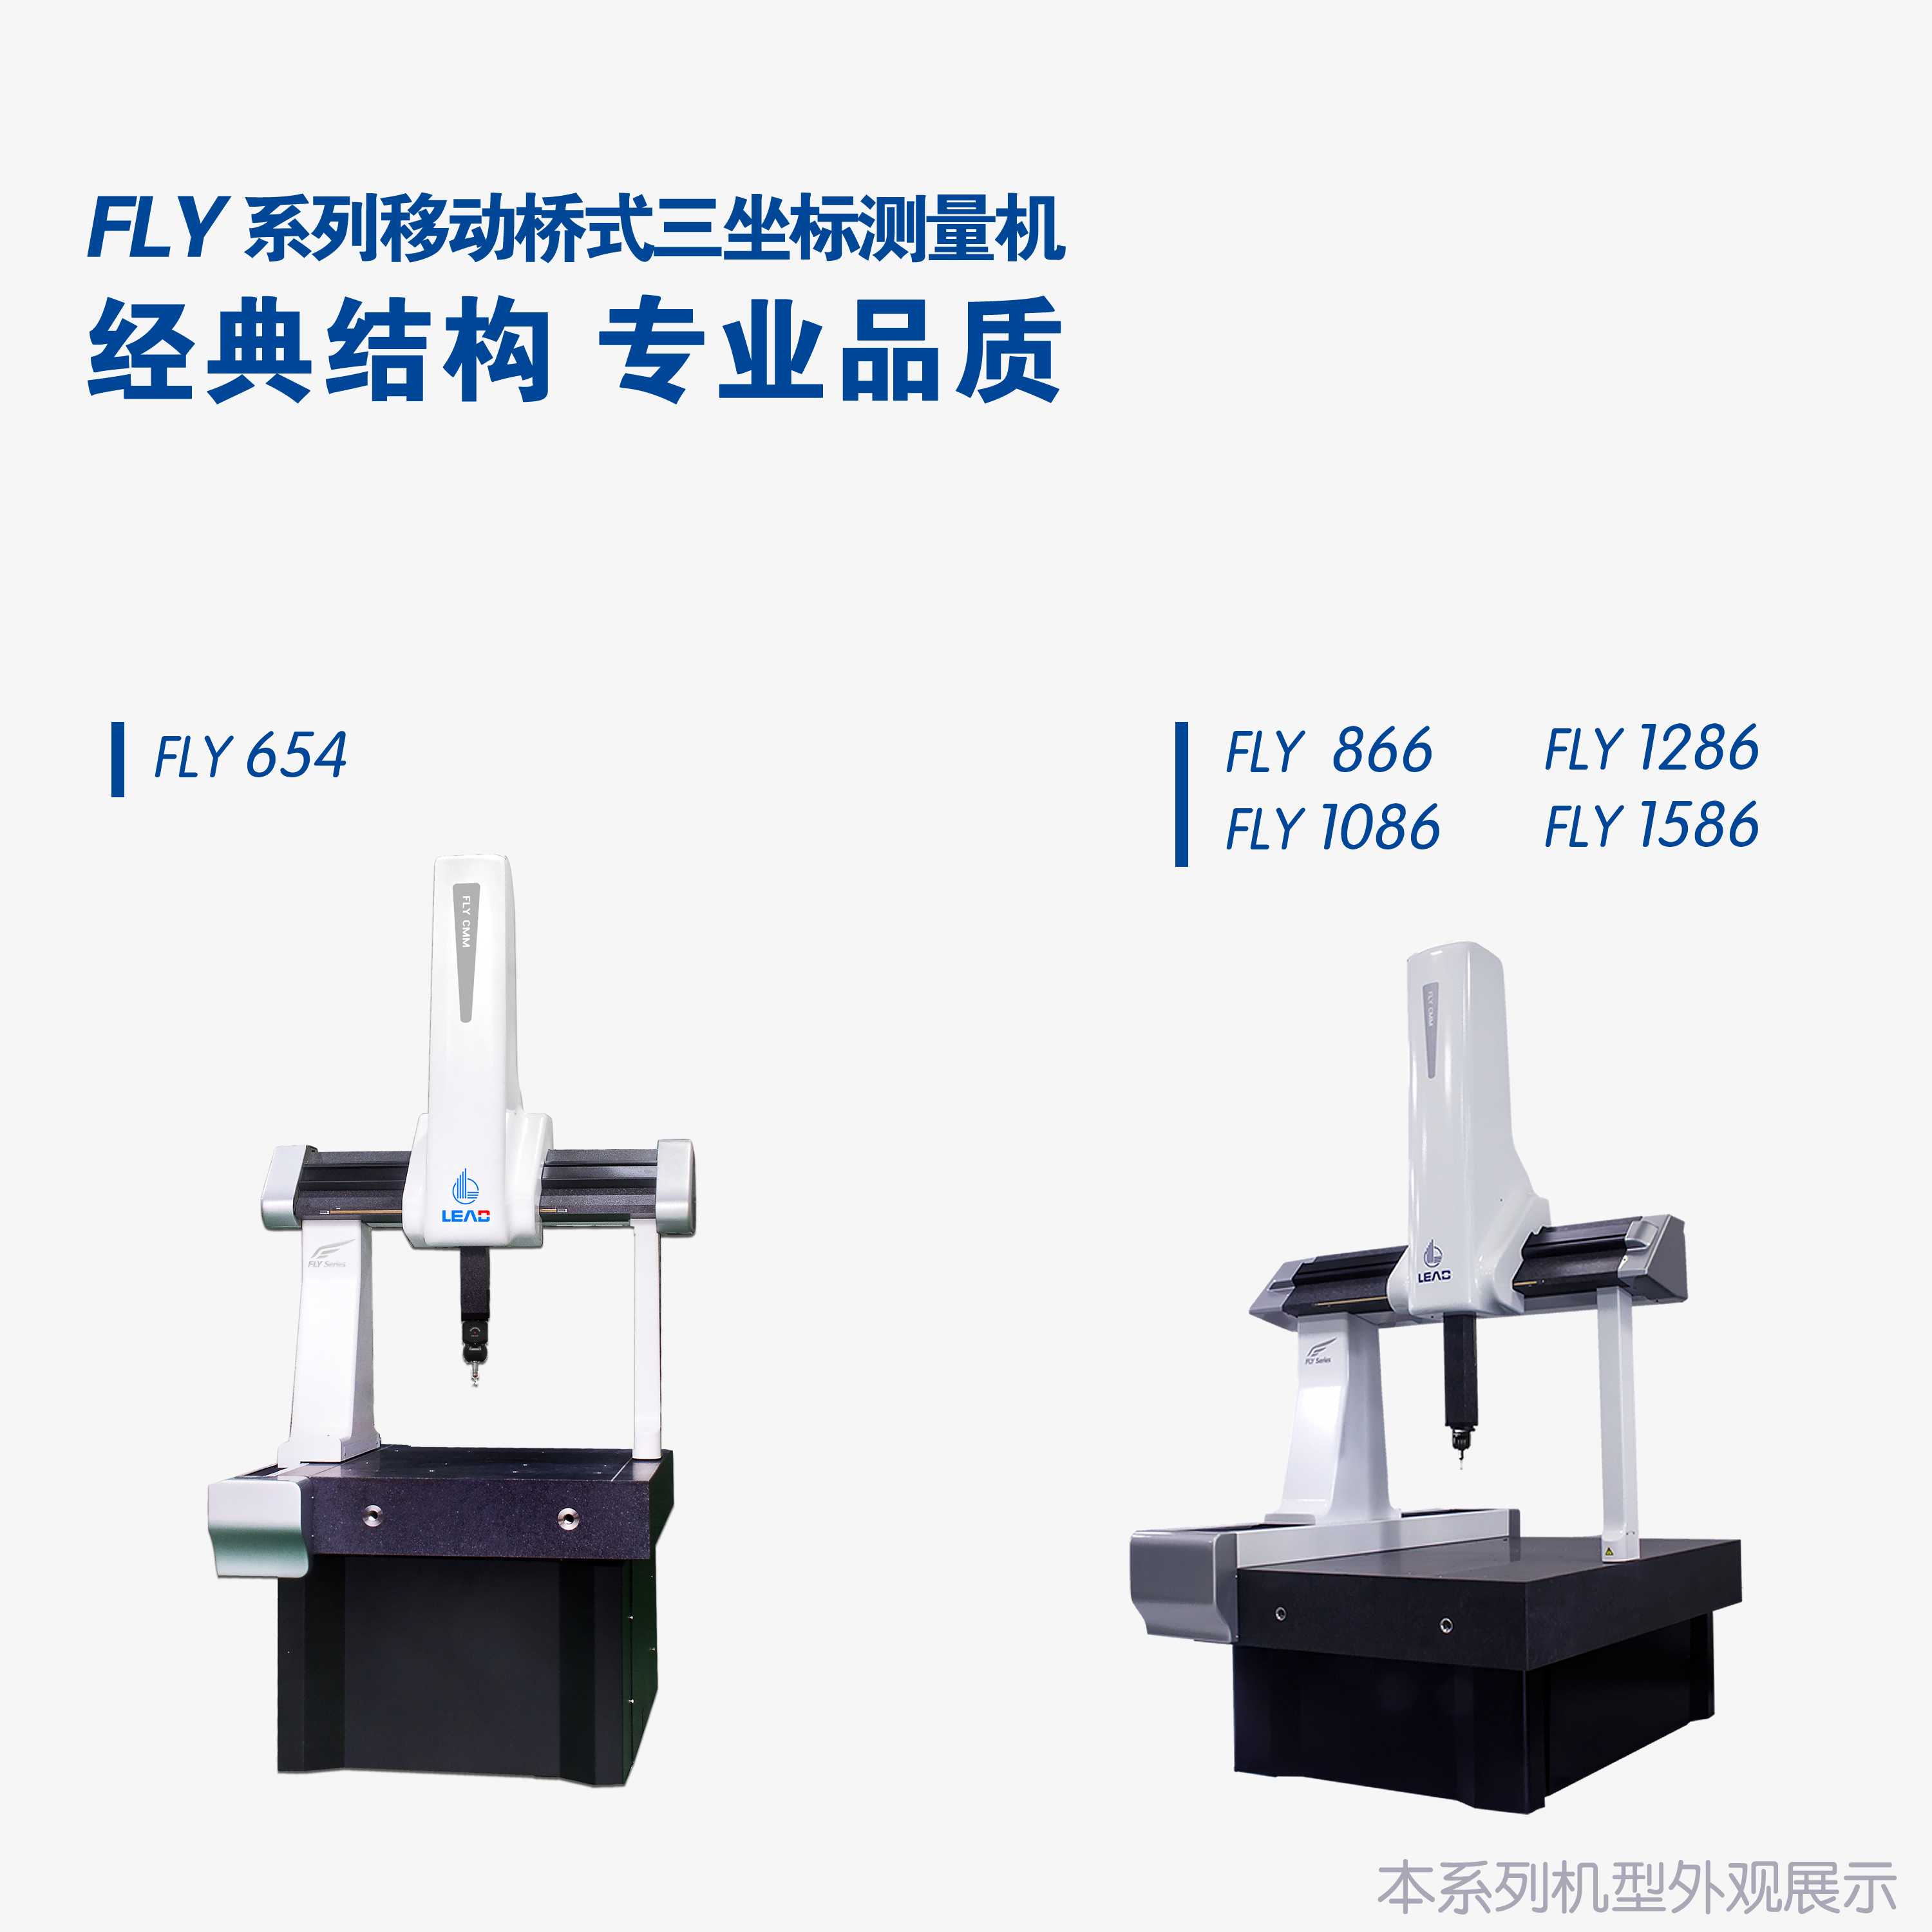 FLY系列移动桥式三坐标测量机